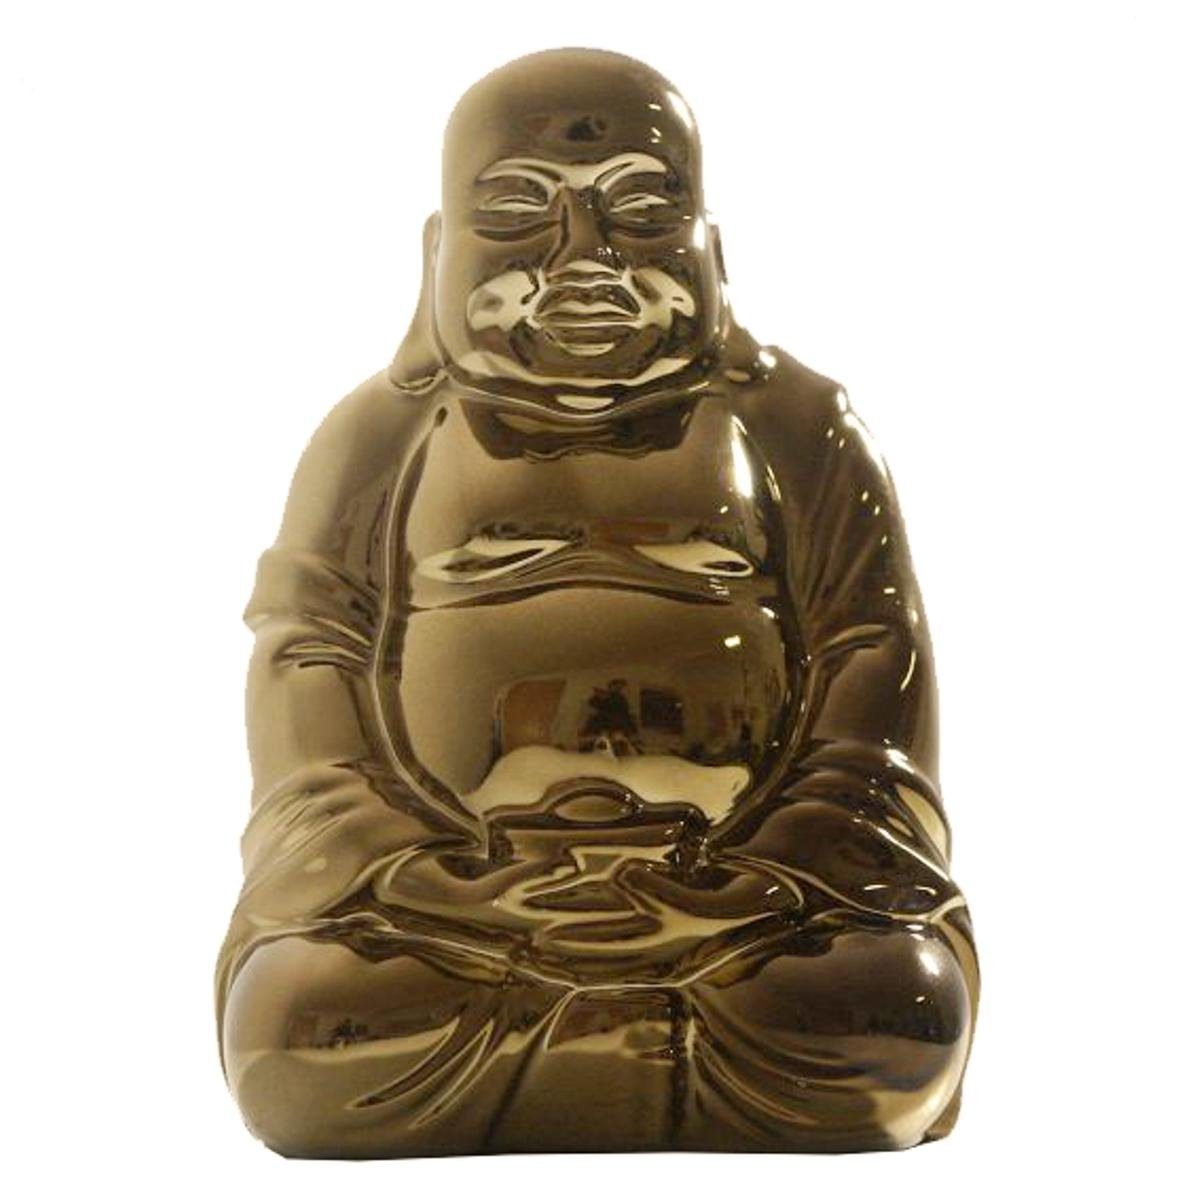 440s Buddhafigur 440s Keramik BUDDHA bronzefarben glänzend ca. 20 cm H